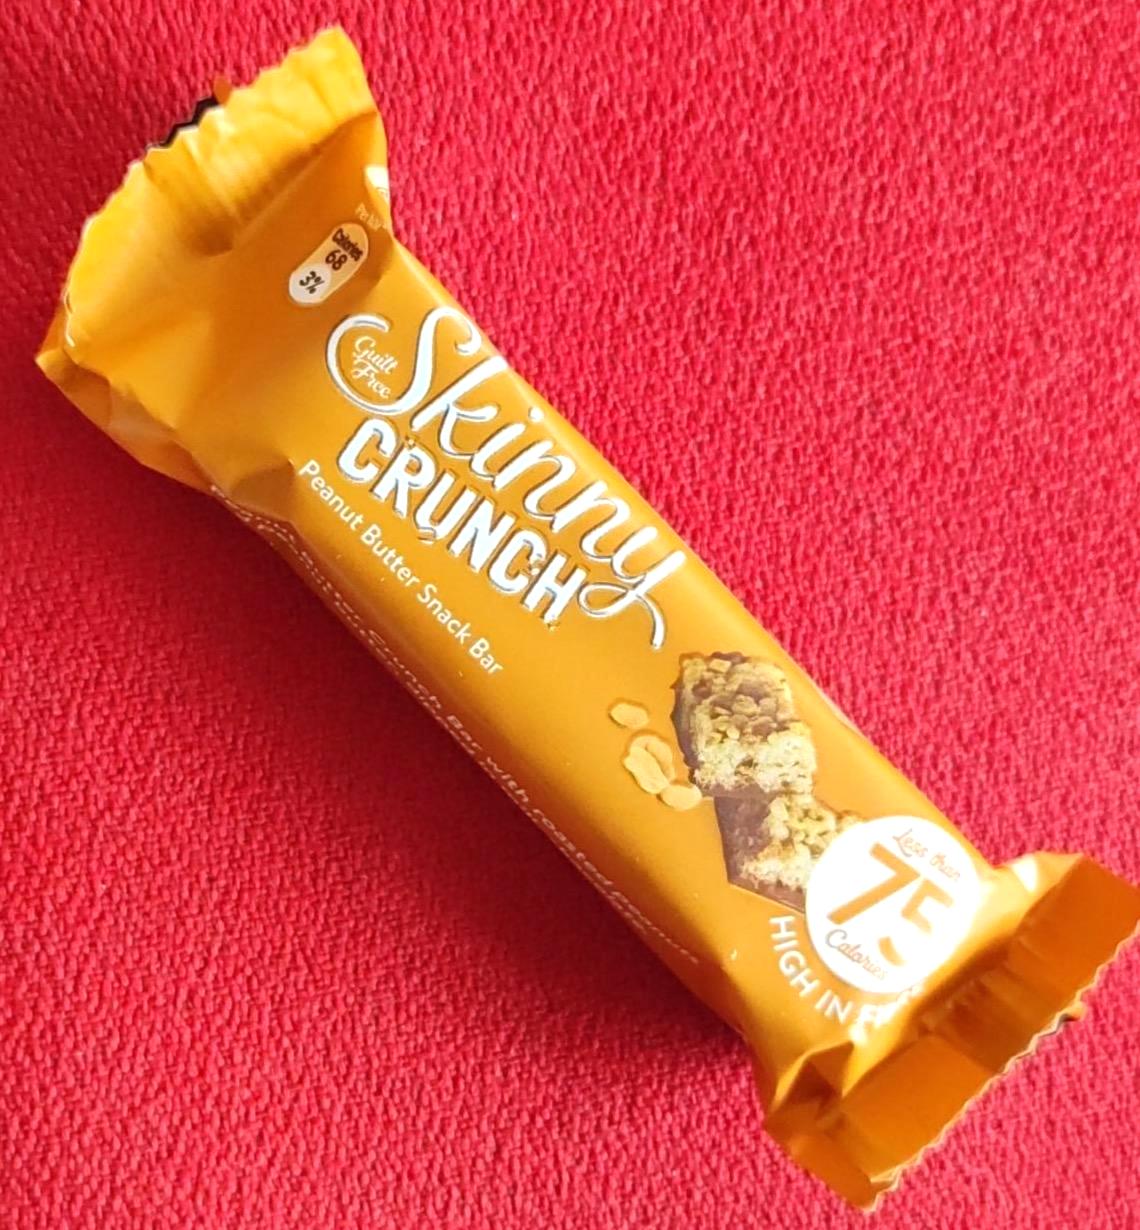 Képek - Skinny Crunch Peanut Butter Snack Bar